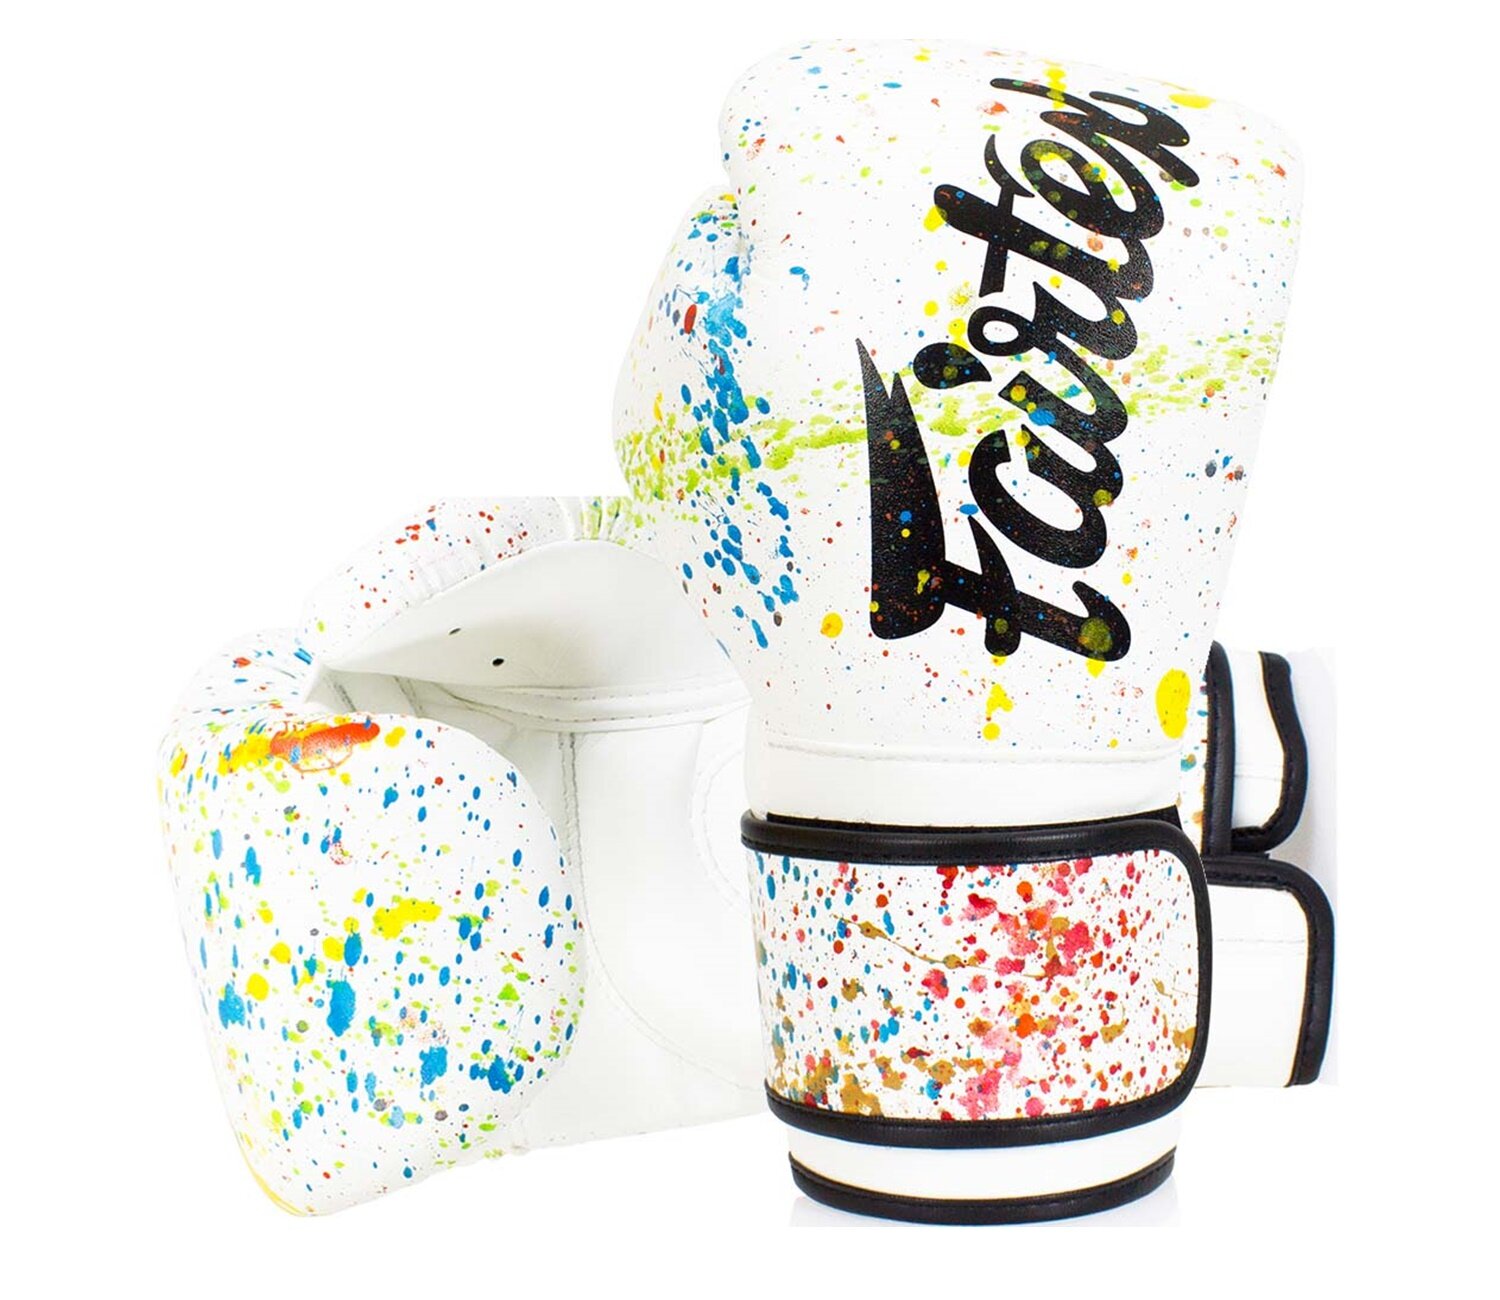 Fairtex Boxing Gloves BGV14PT Printing Multi color  8,10,12,14,16 oz  Sparring MMA K1 นวมซ้อมชก แฟร์แท็ค ลายปริ้นหลากสี